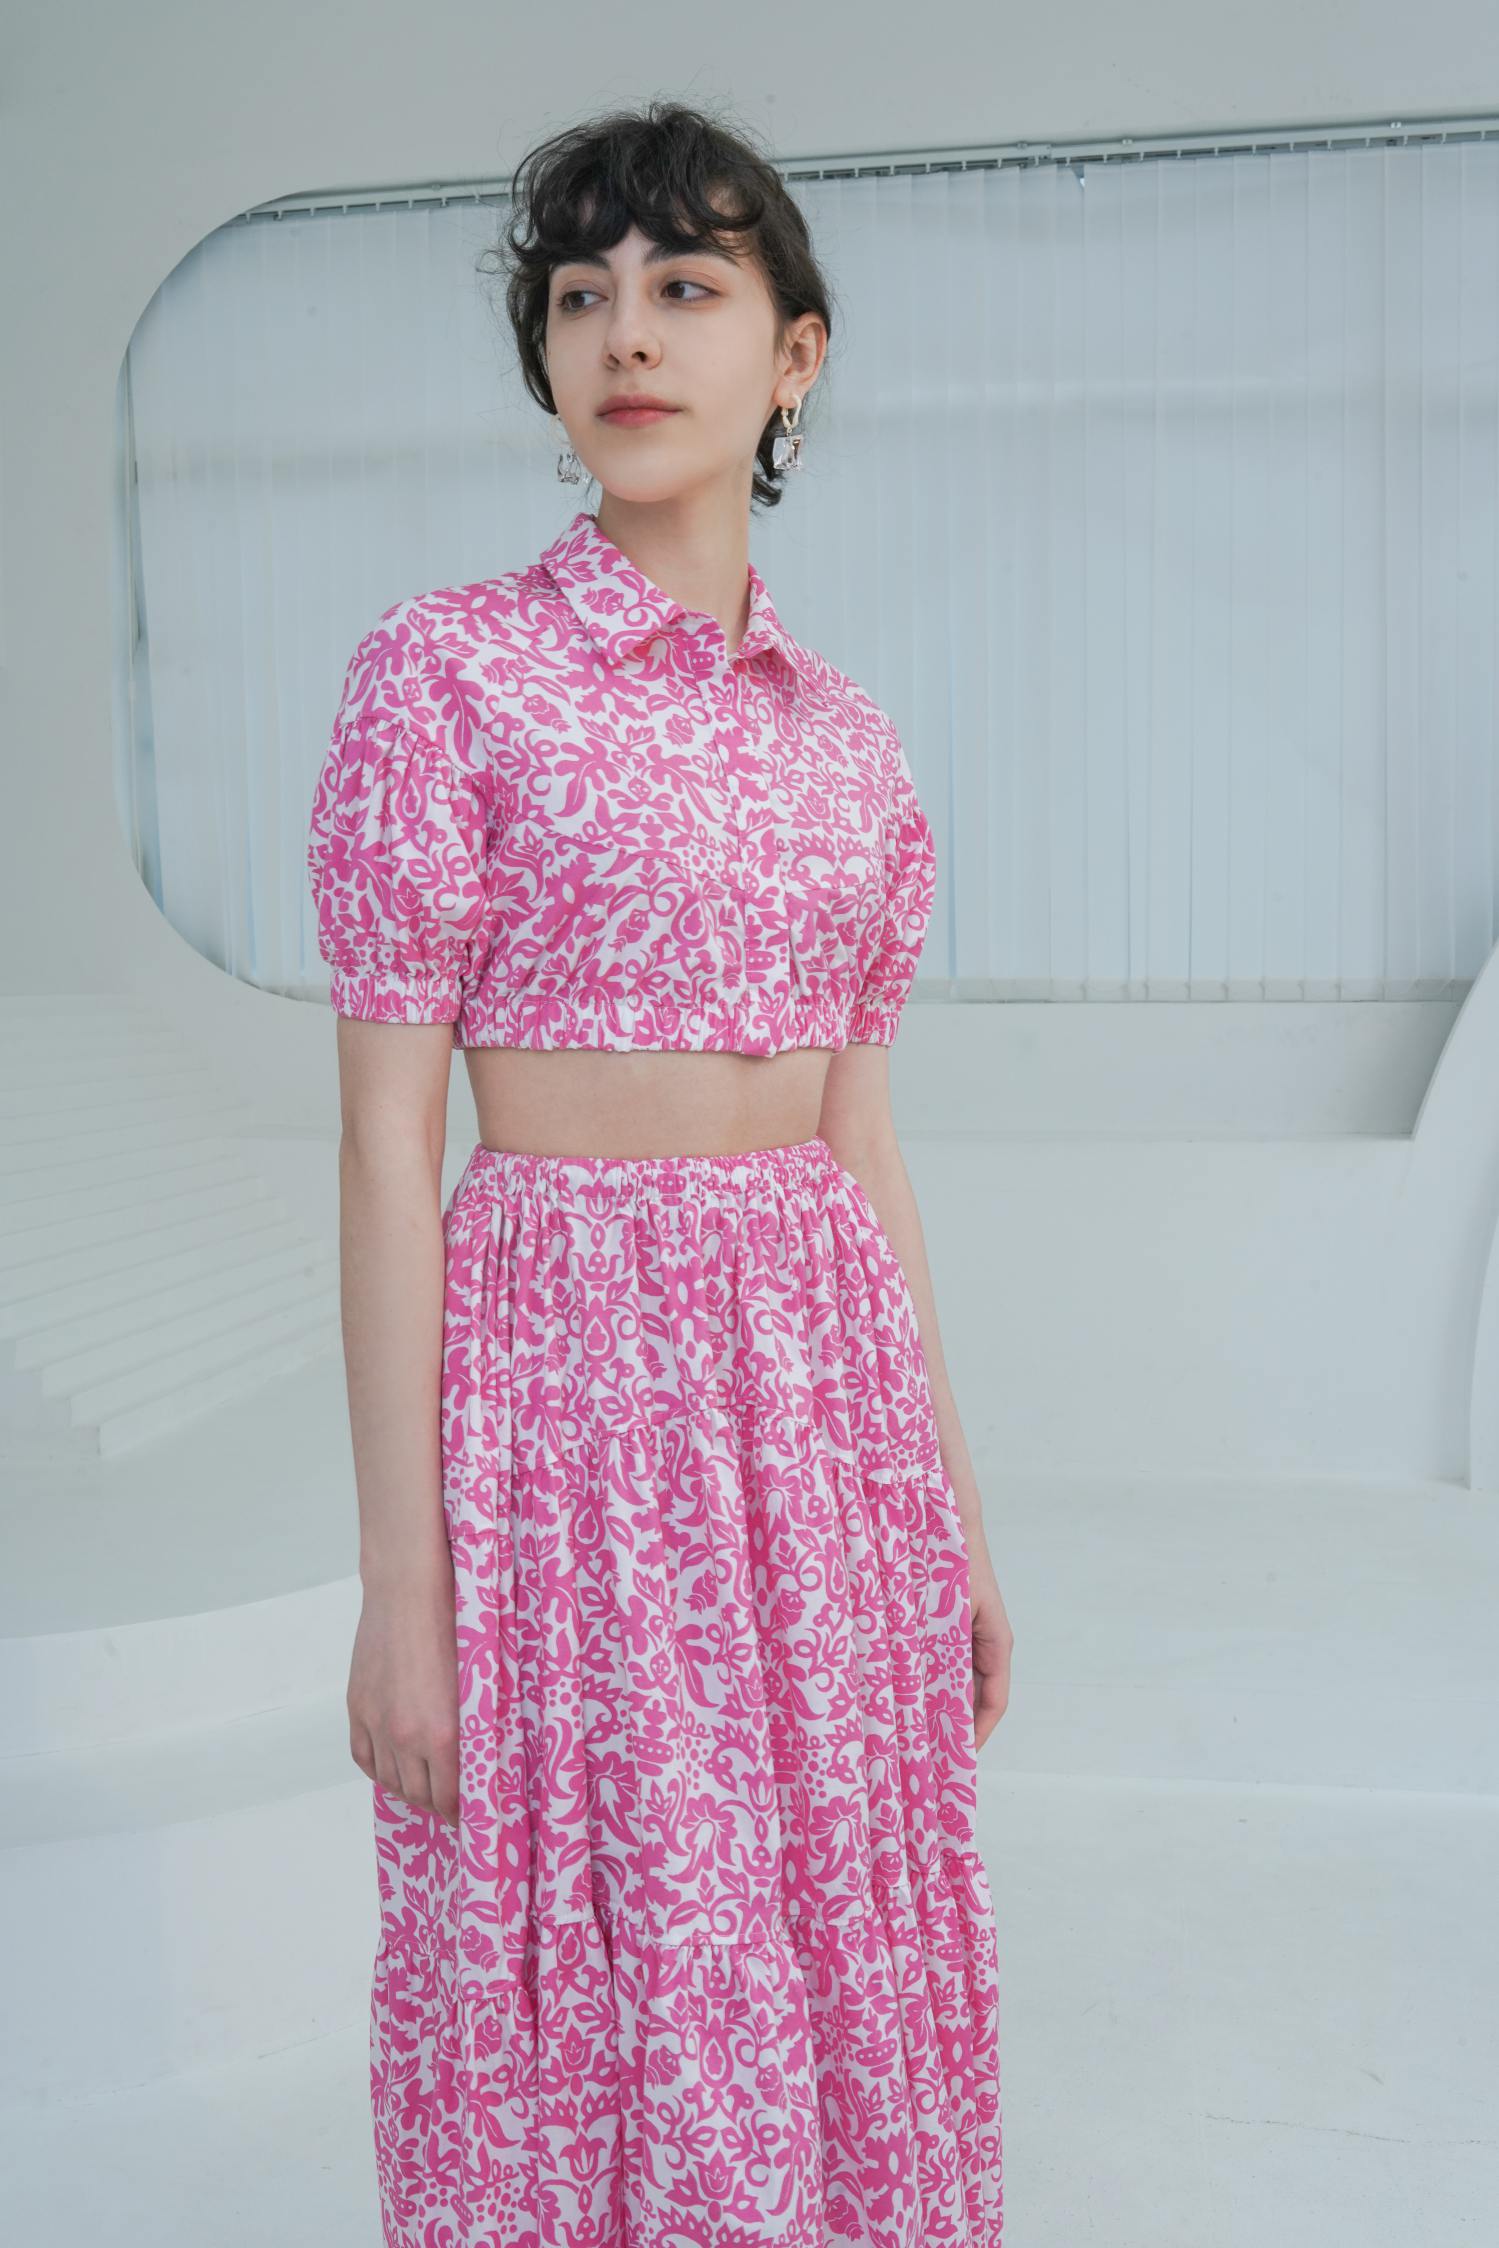 UUNIQ FLORENCE Pink Floral  Midi Skirt